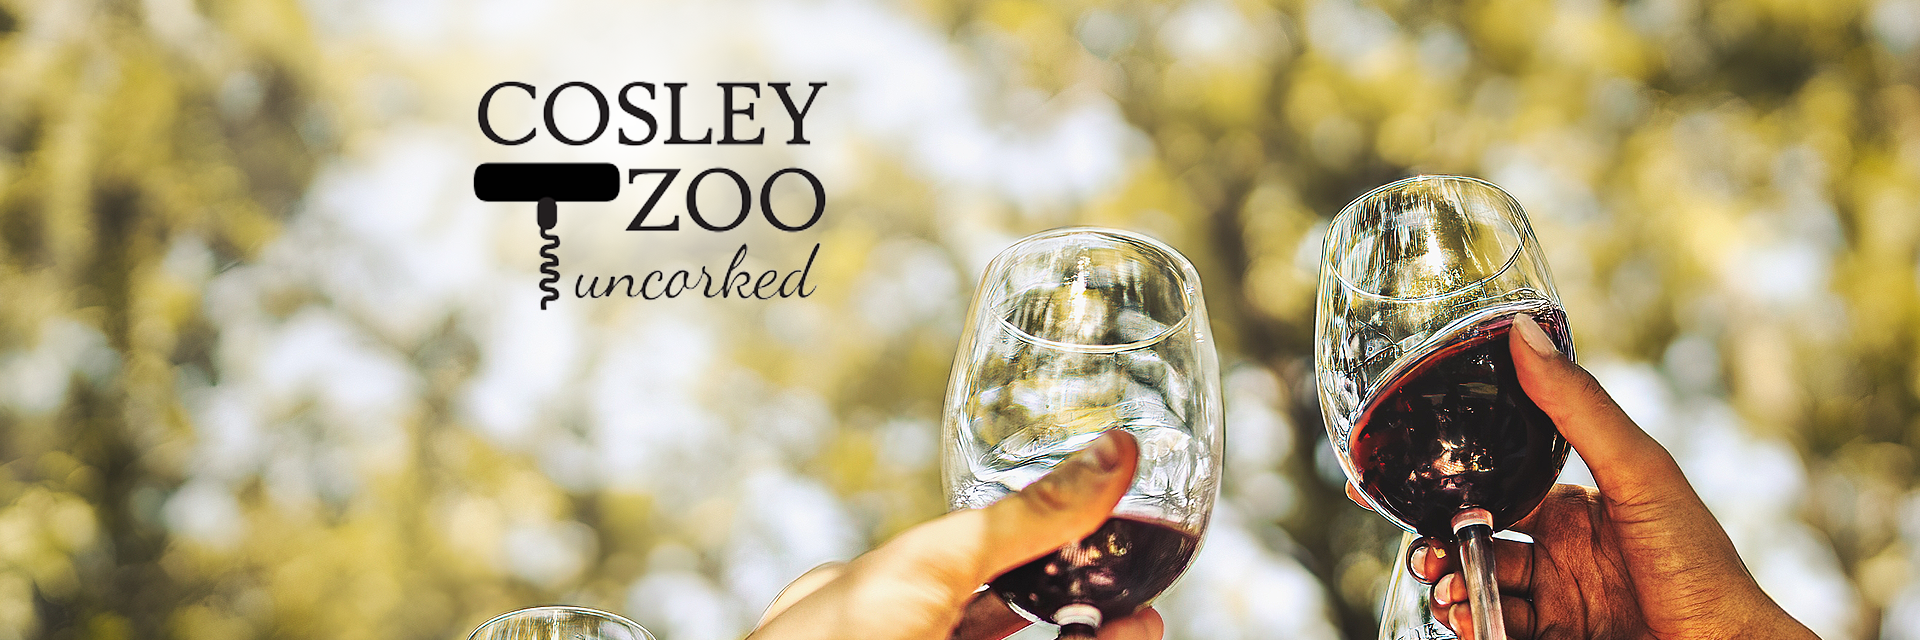 Wine Tasting-Cosley Zoo Uncorked